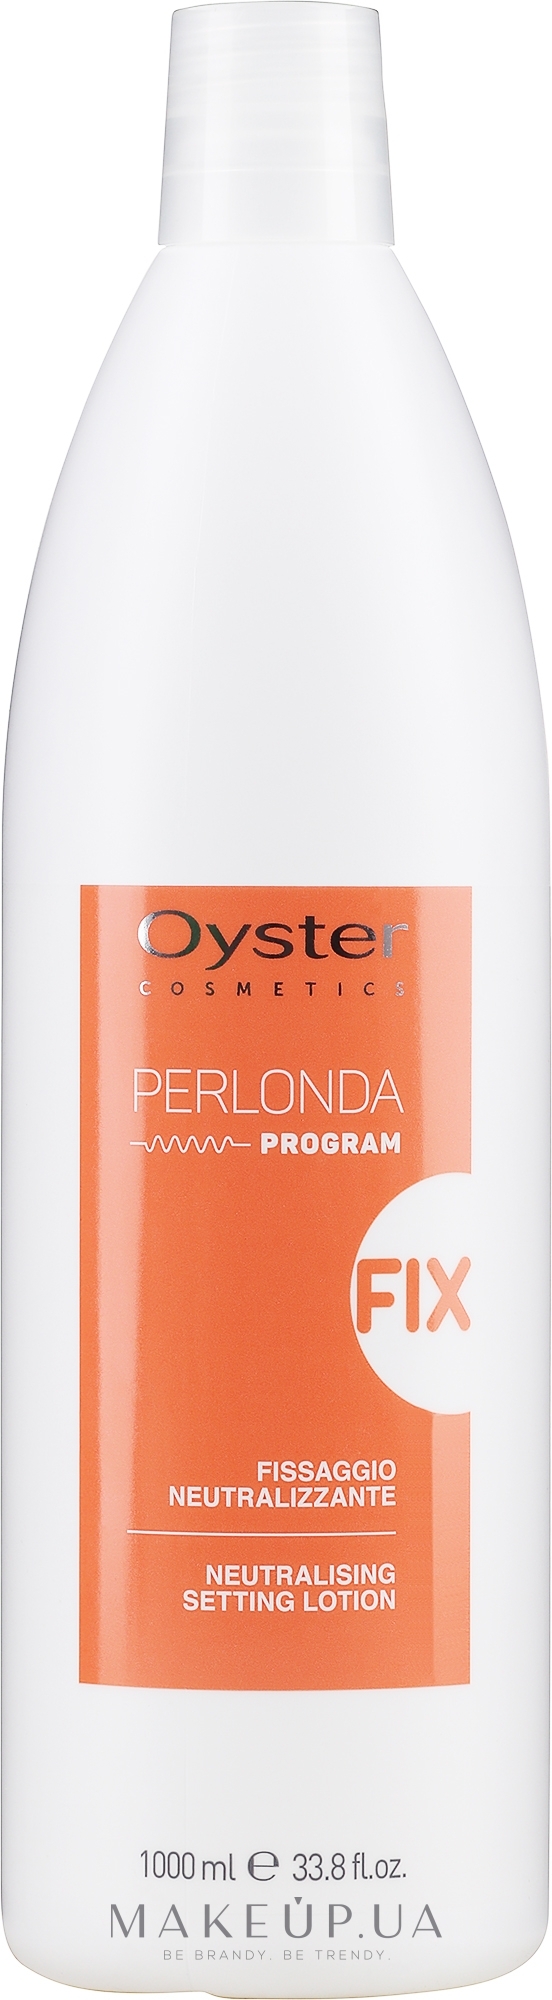 Фиксатор для химической завивки - Oyster Cosmetics Perlonda Fixer For Chemical Perm — фото 1000ml